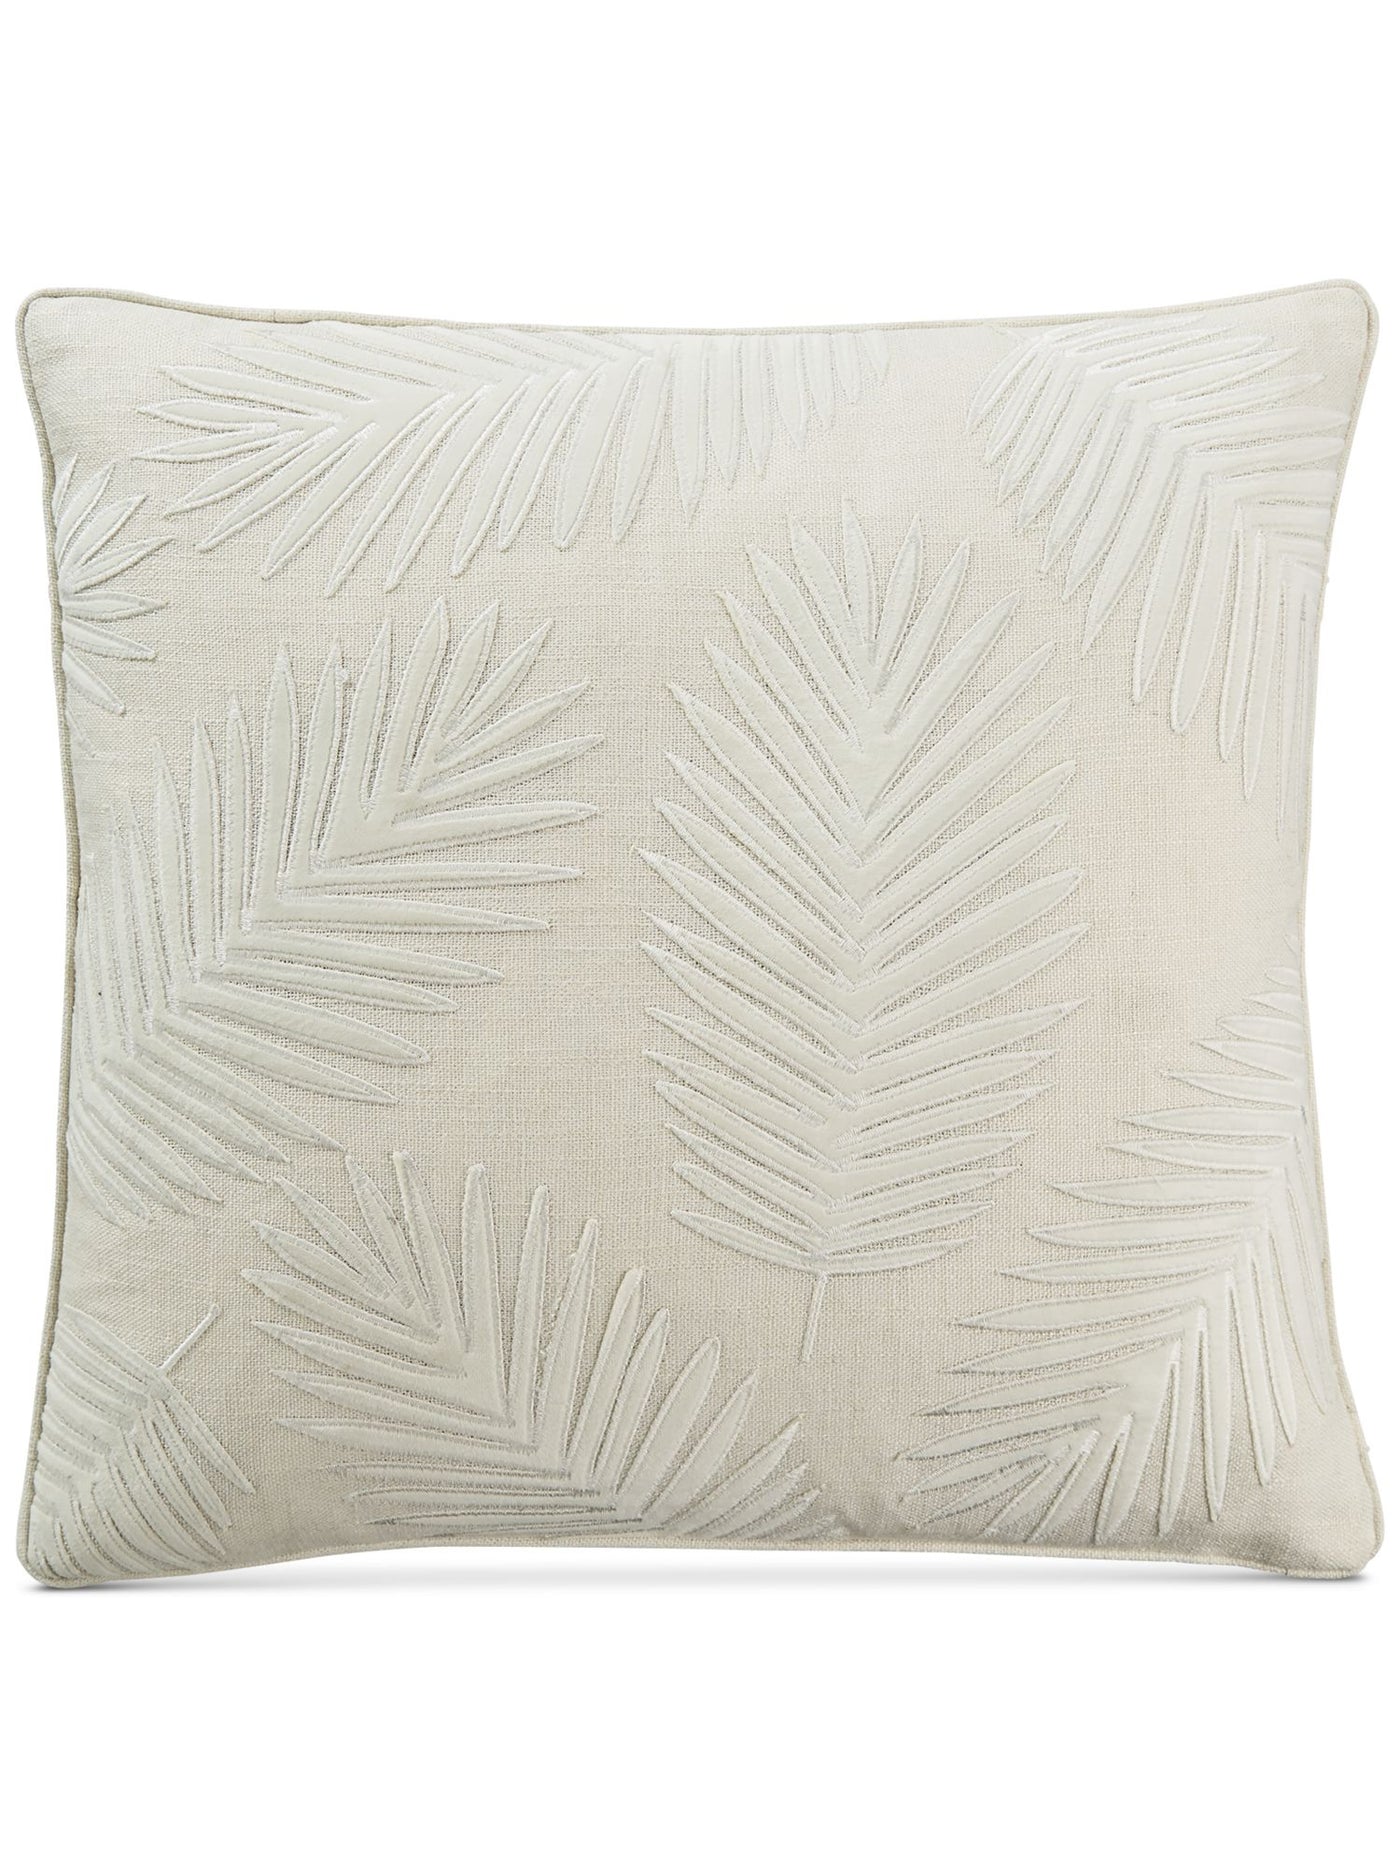 LACOURTE White Palm Print 20 X 20 Decorative Pillow